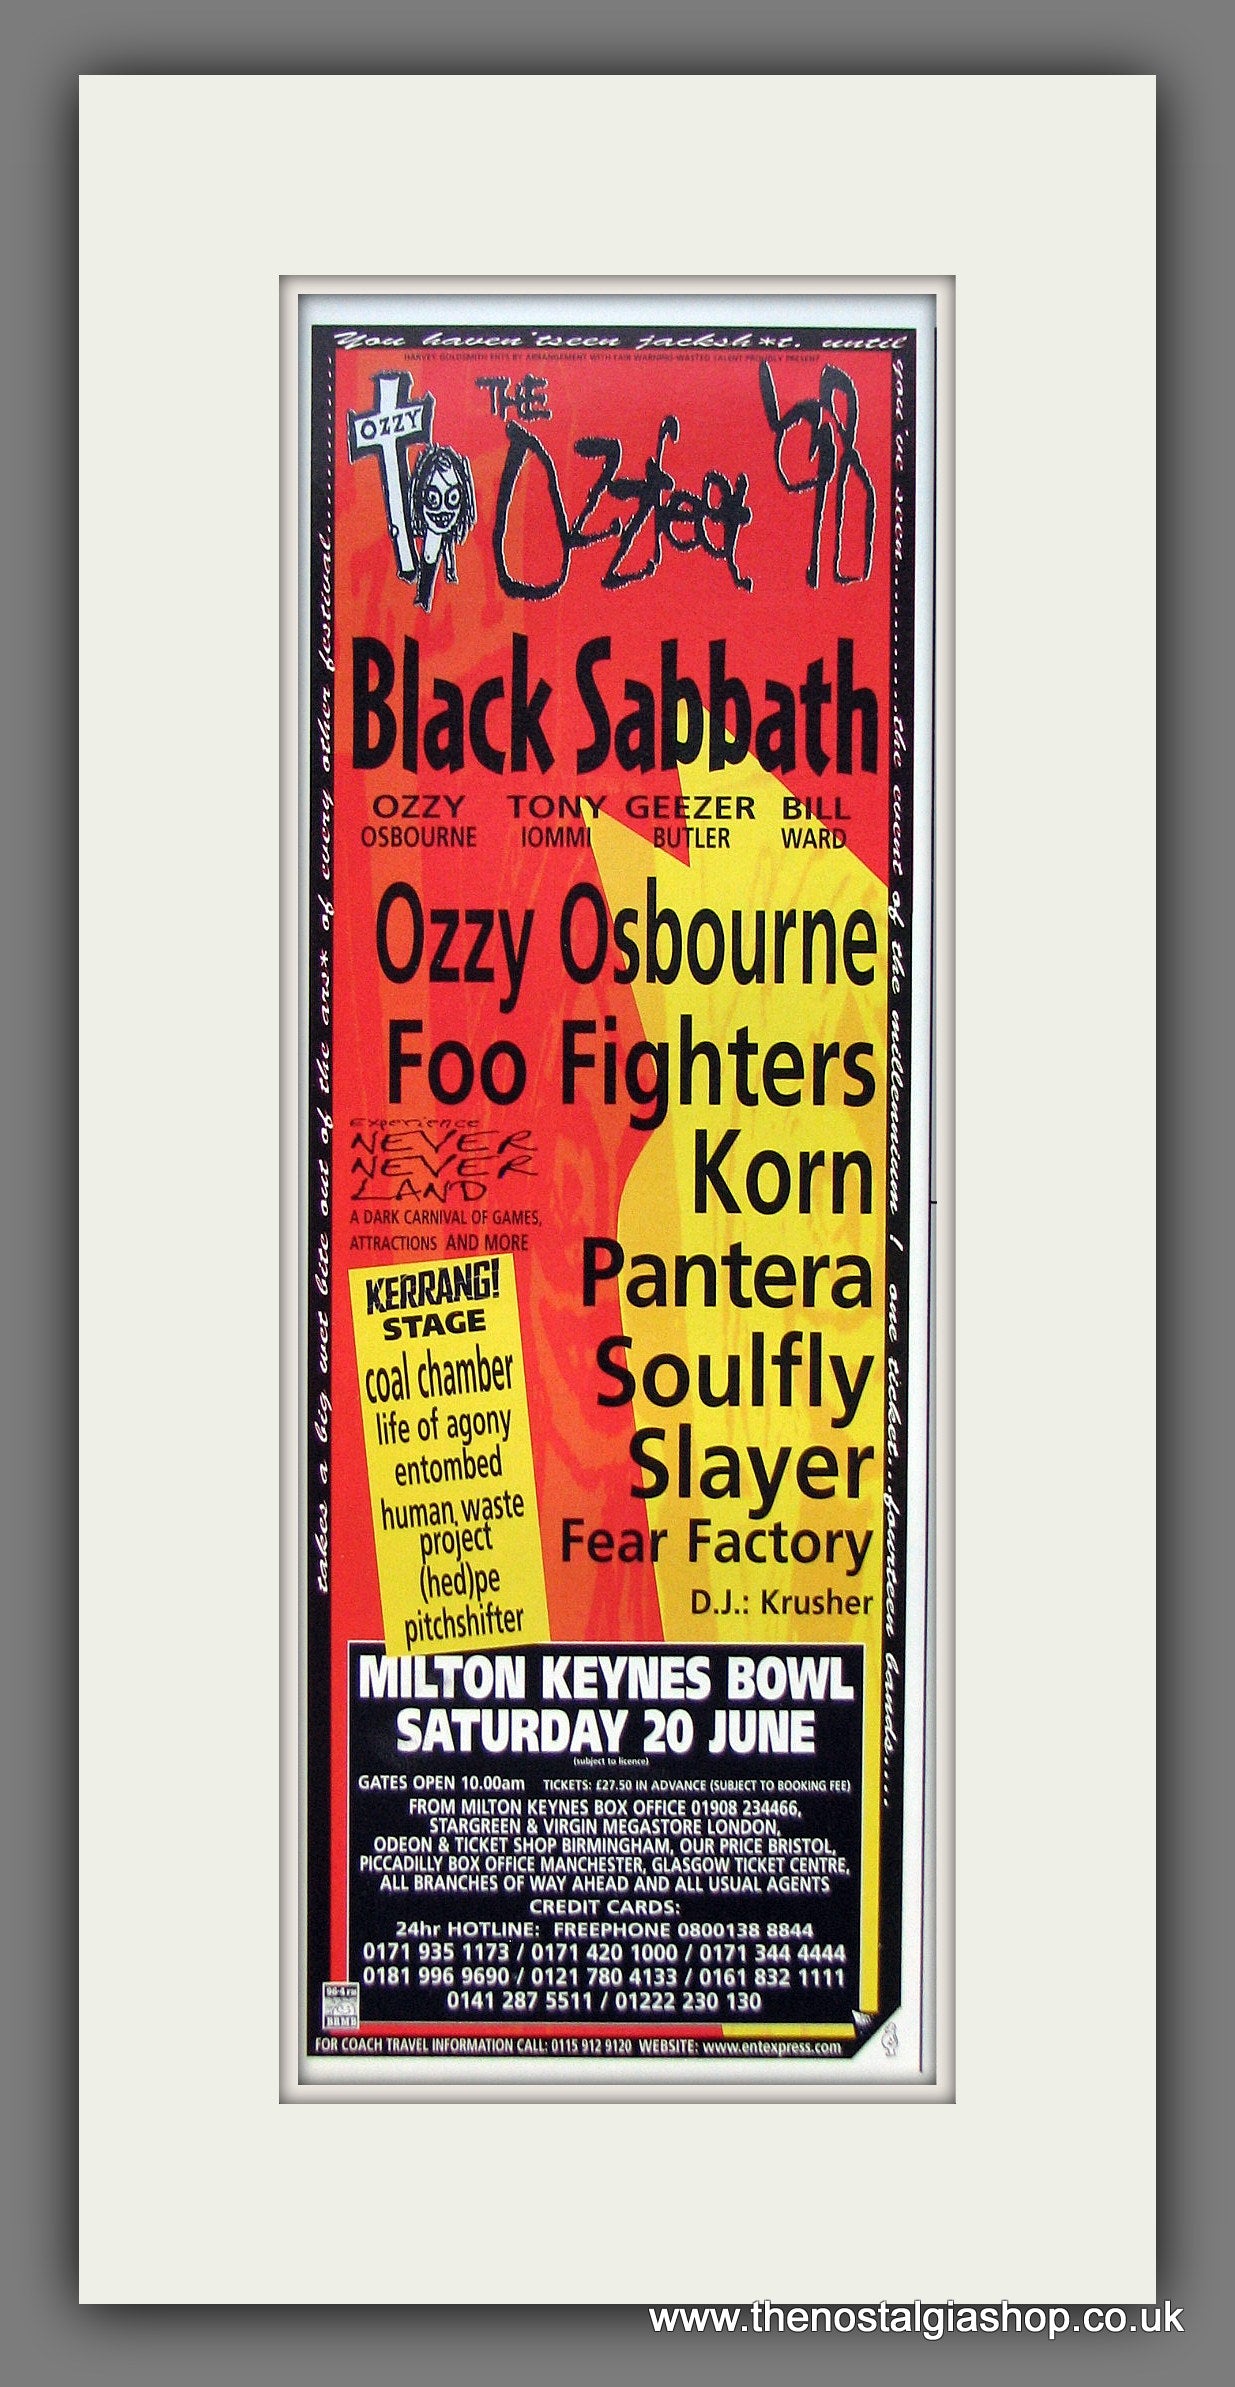 Ozzfest 1998. Black Sabbath. Ozzy Osbourne. Original Advert 1998 (ref AD400068)